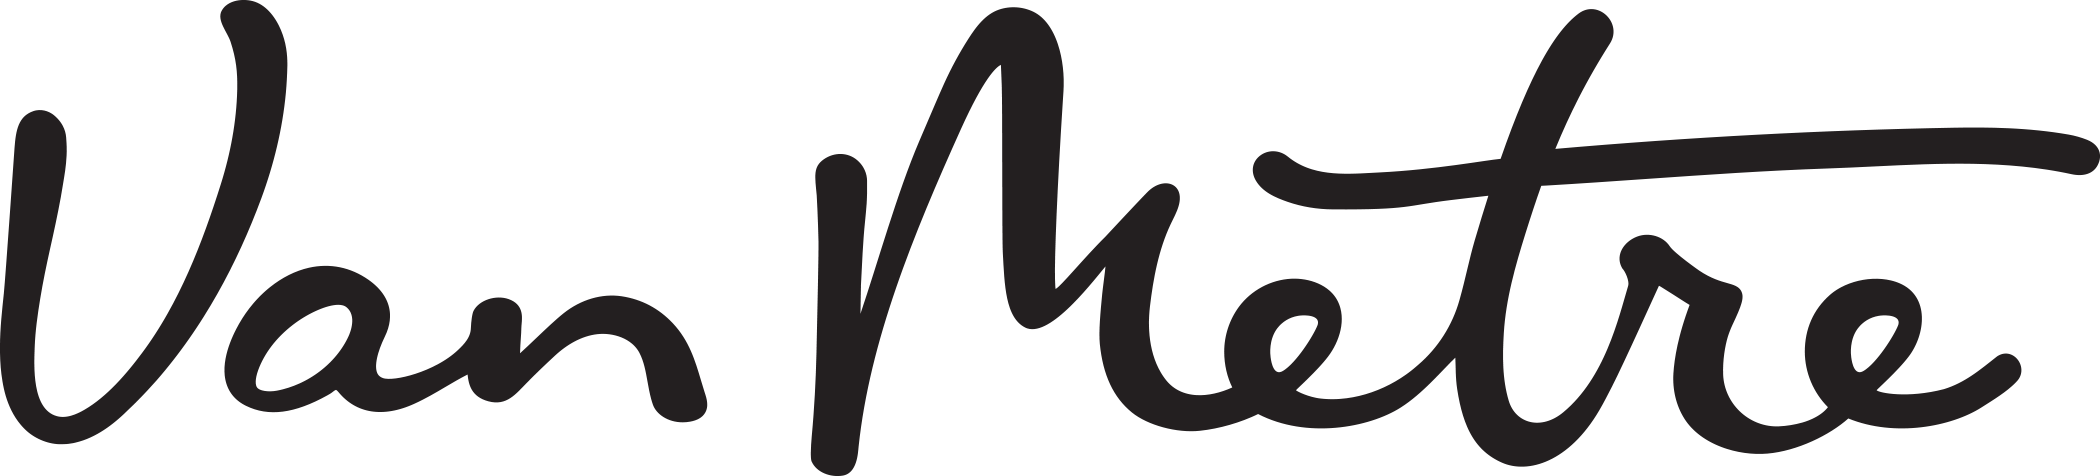 Van Metre Companies Company Logo